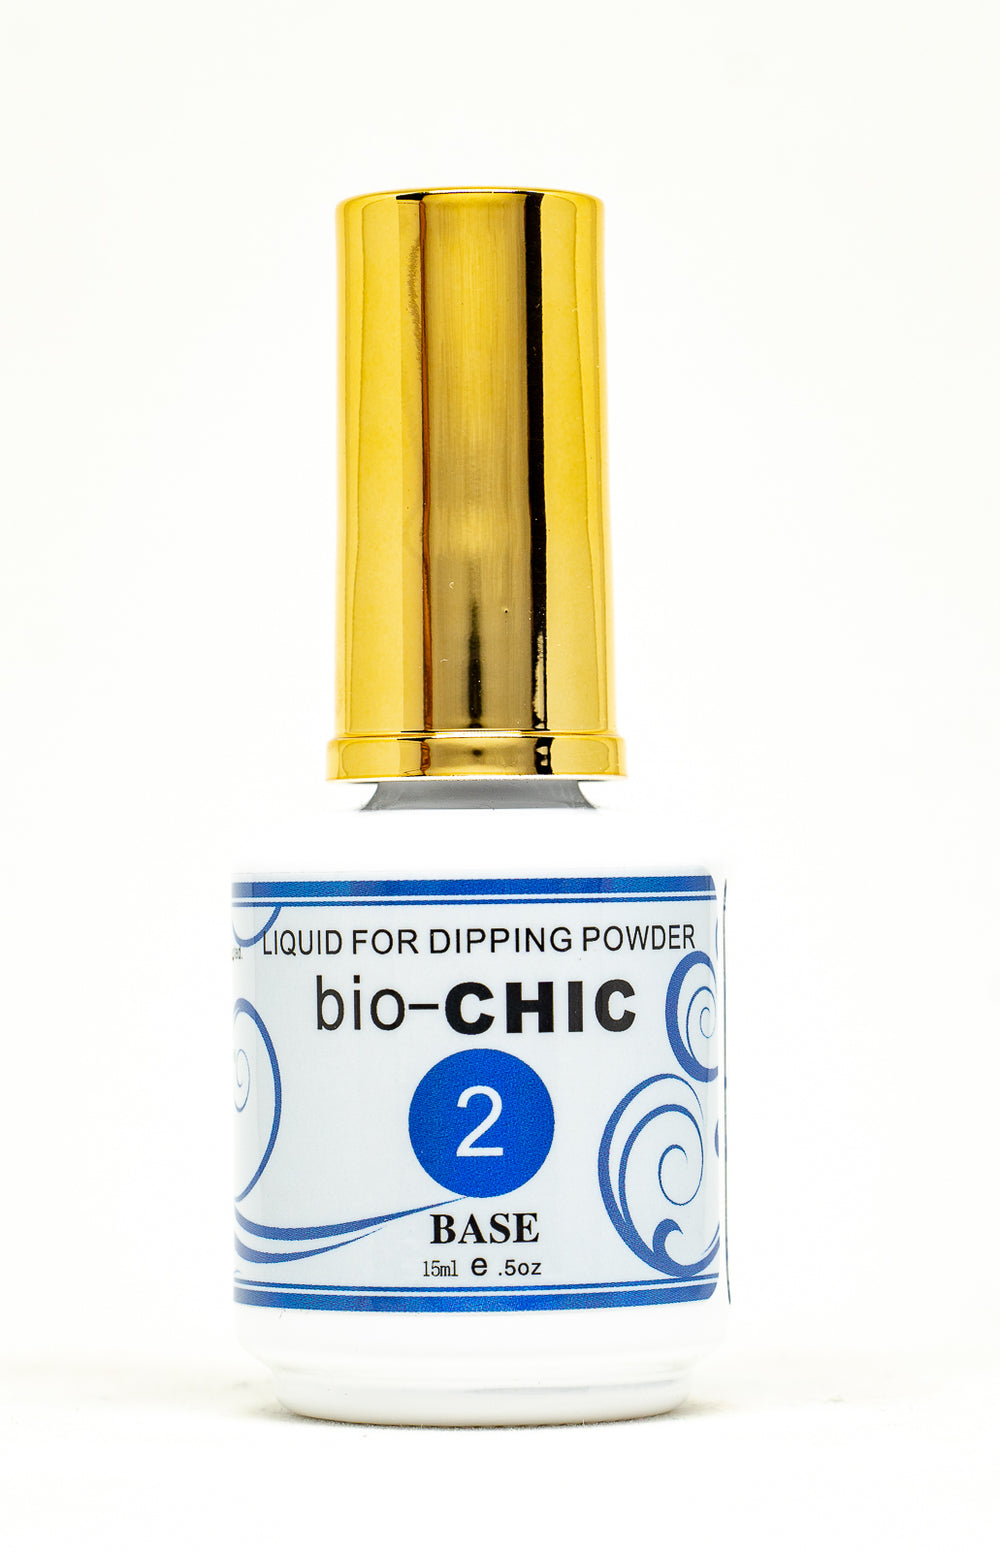 Bio-Chic - Liquid For Dipping Powder - Base